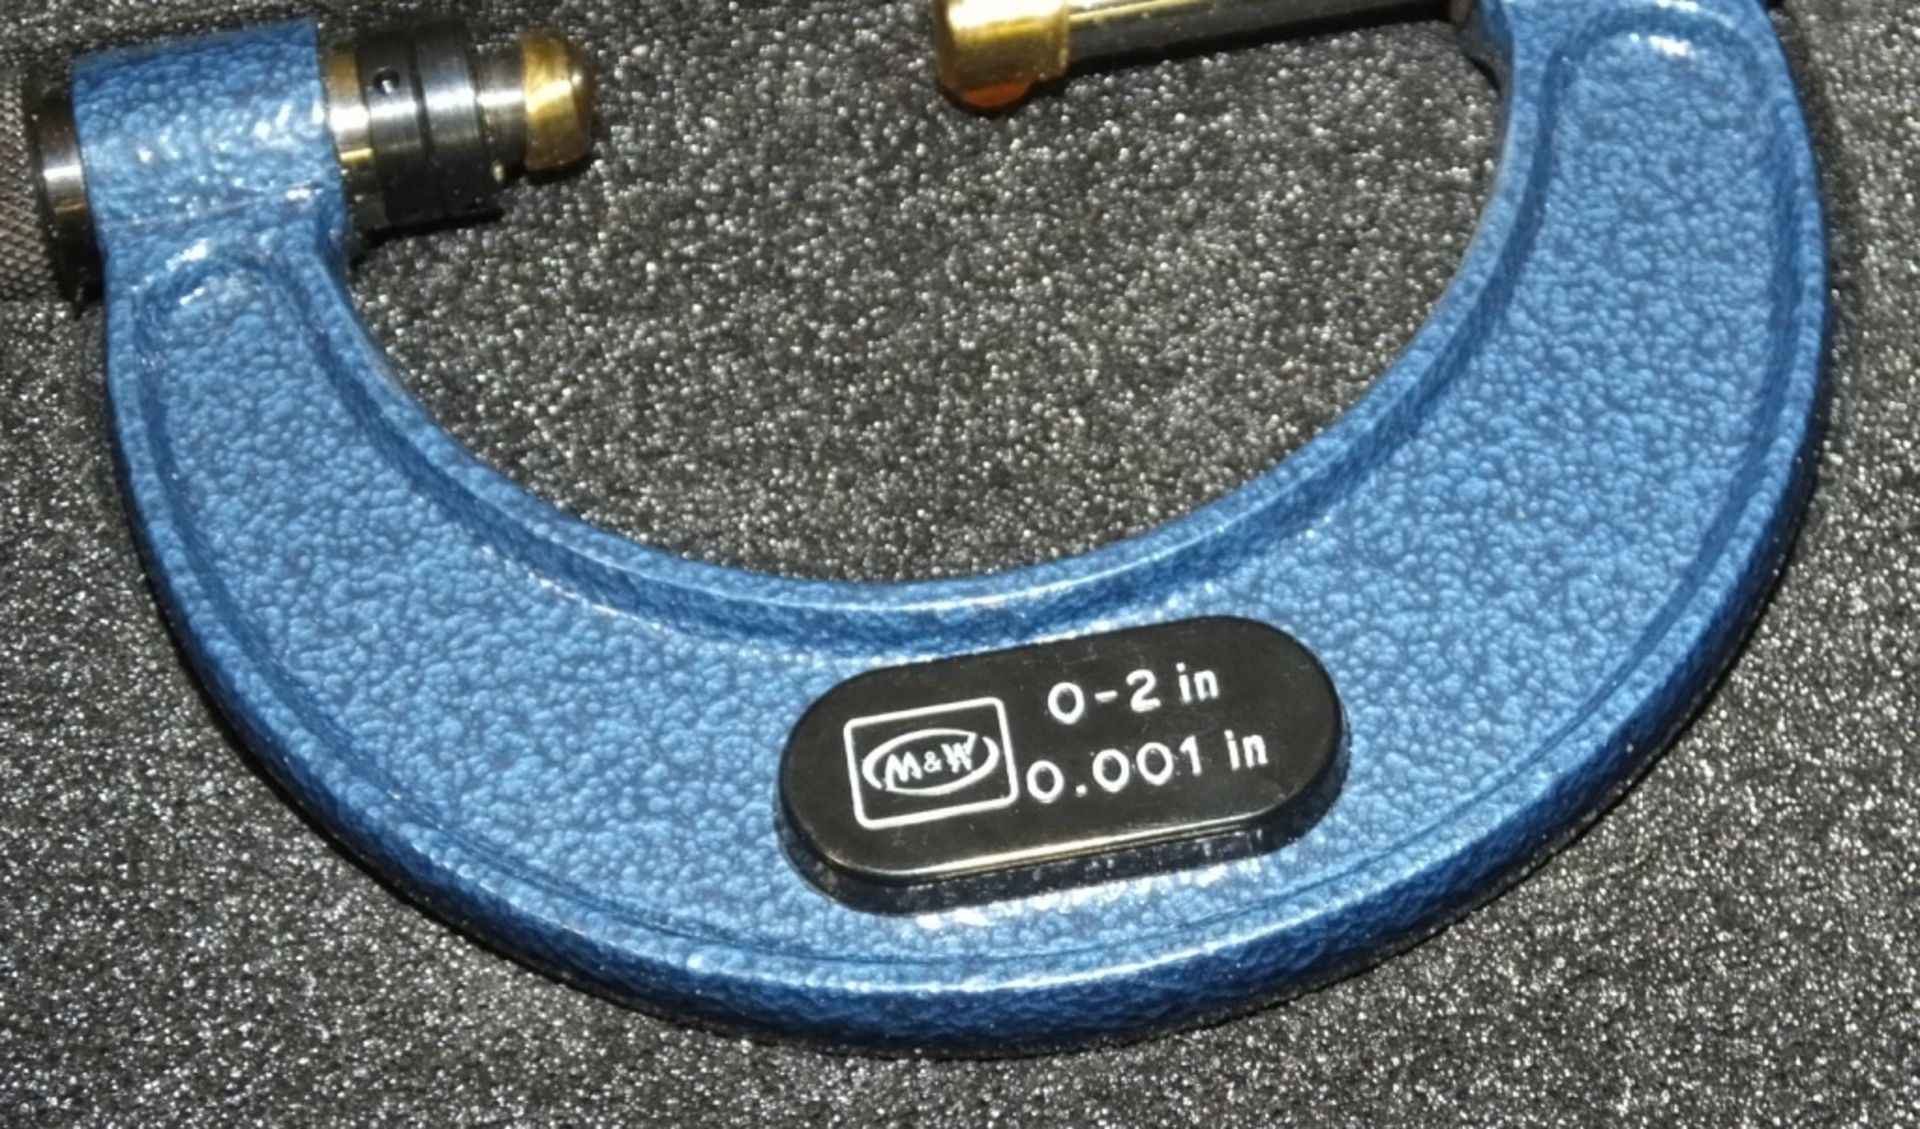 M&W Micrometer 0-2in 0.001in - Image 2 of 2